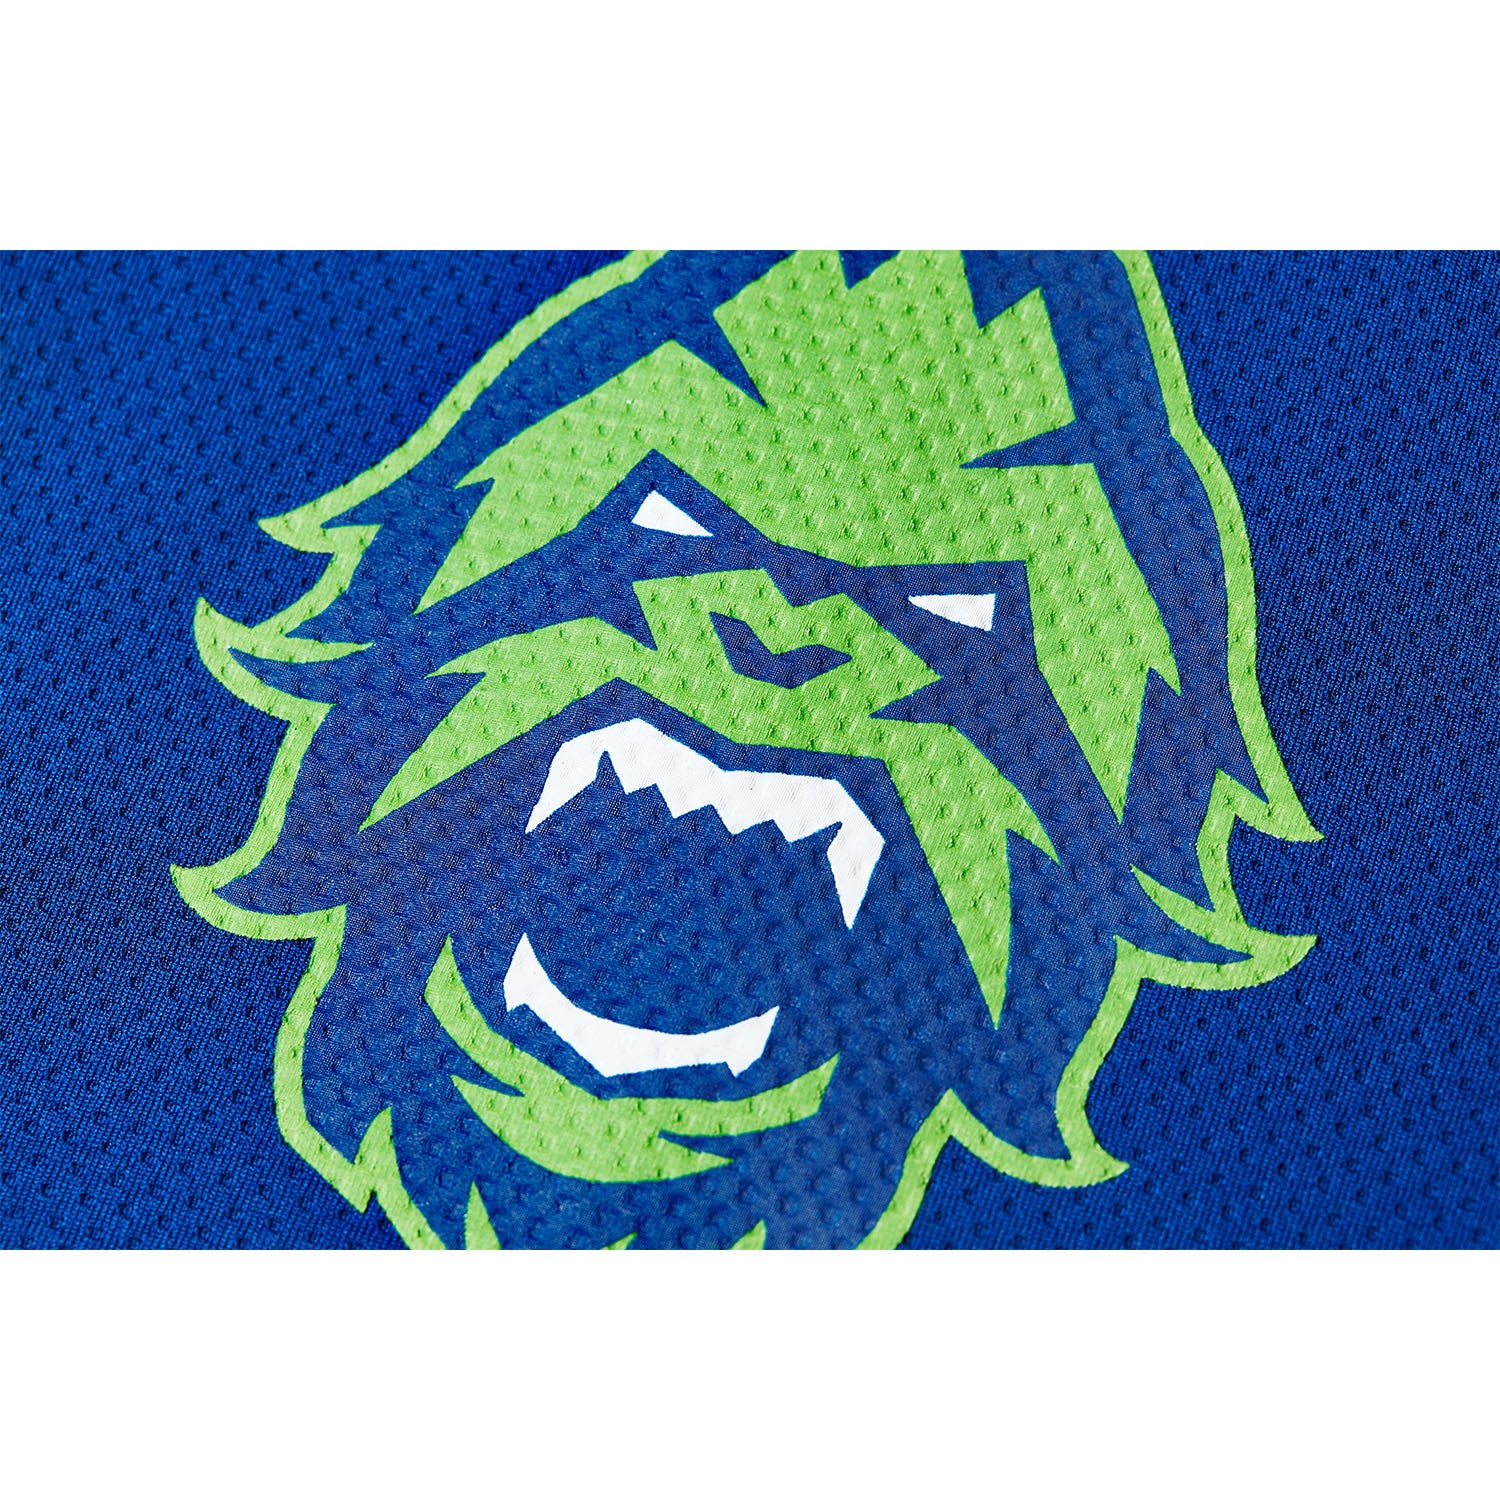 Vancouver Titans Blue Jersey - Logo View